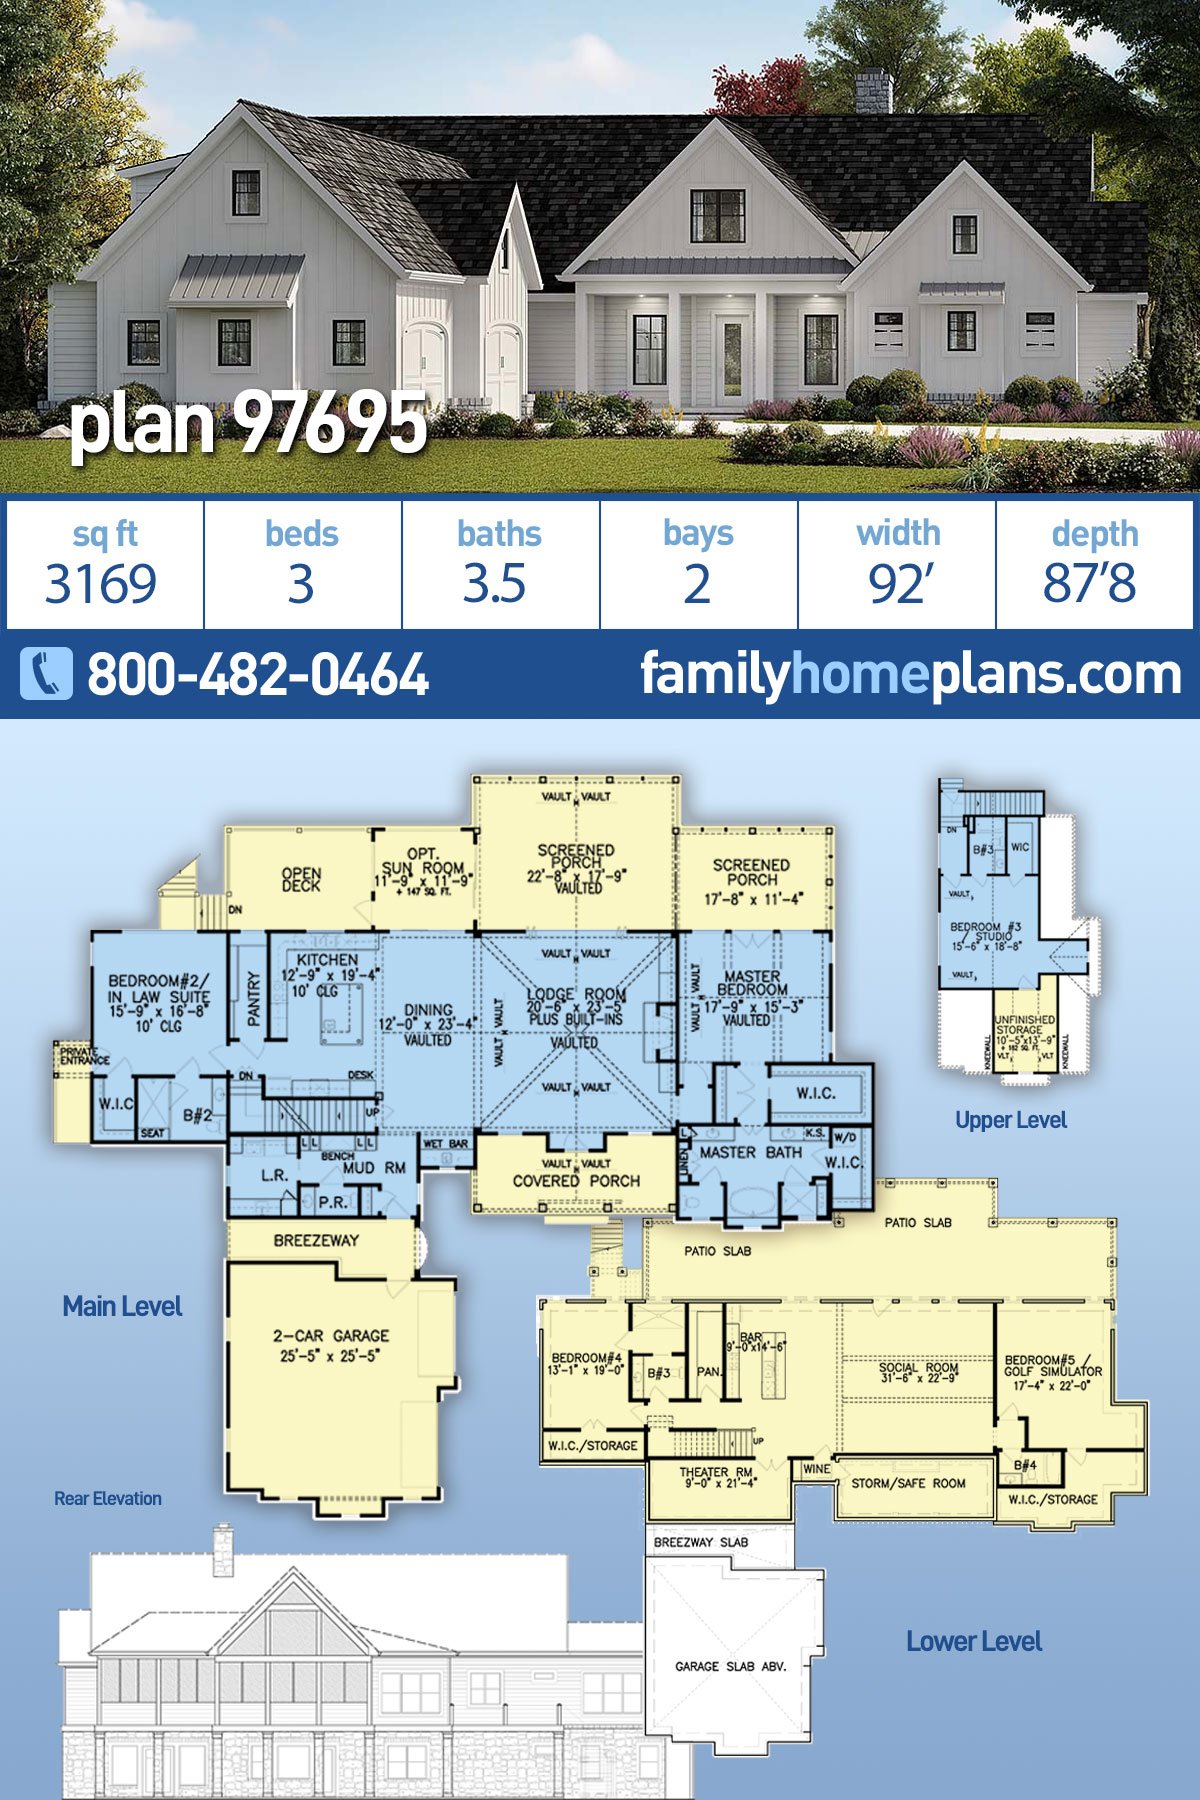 House Plan 97695